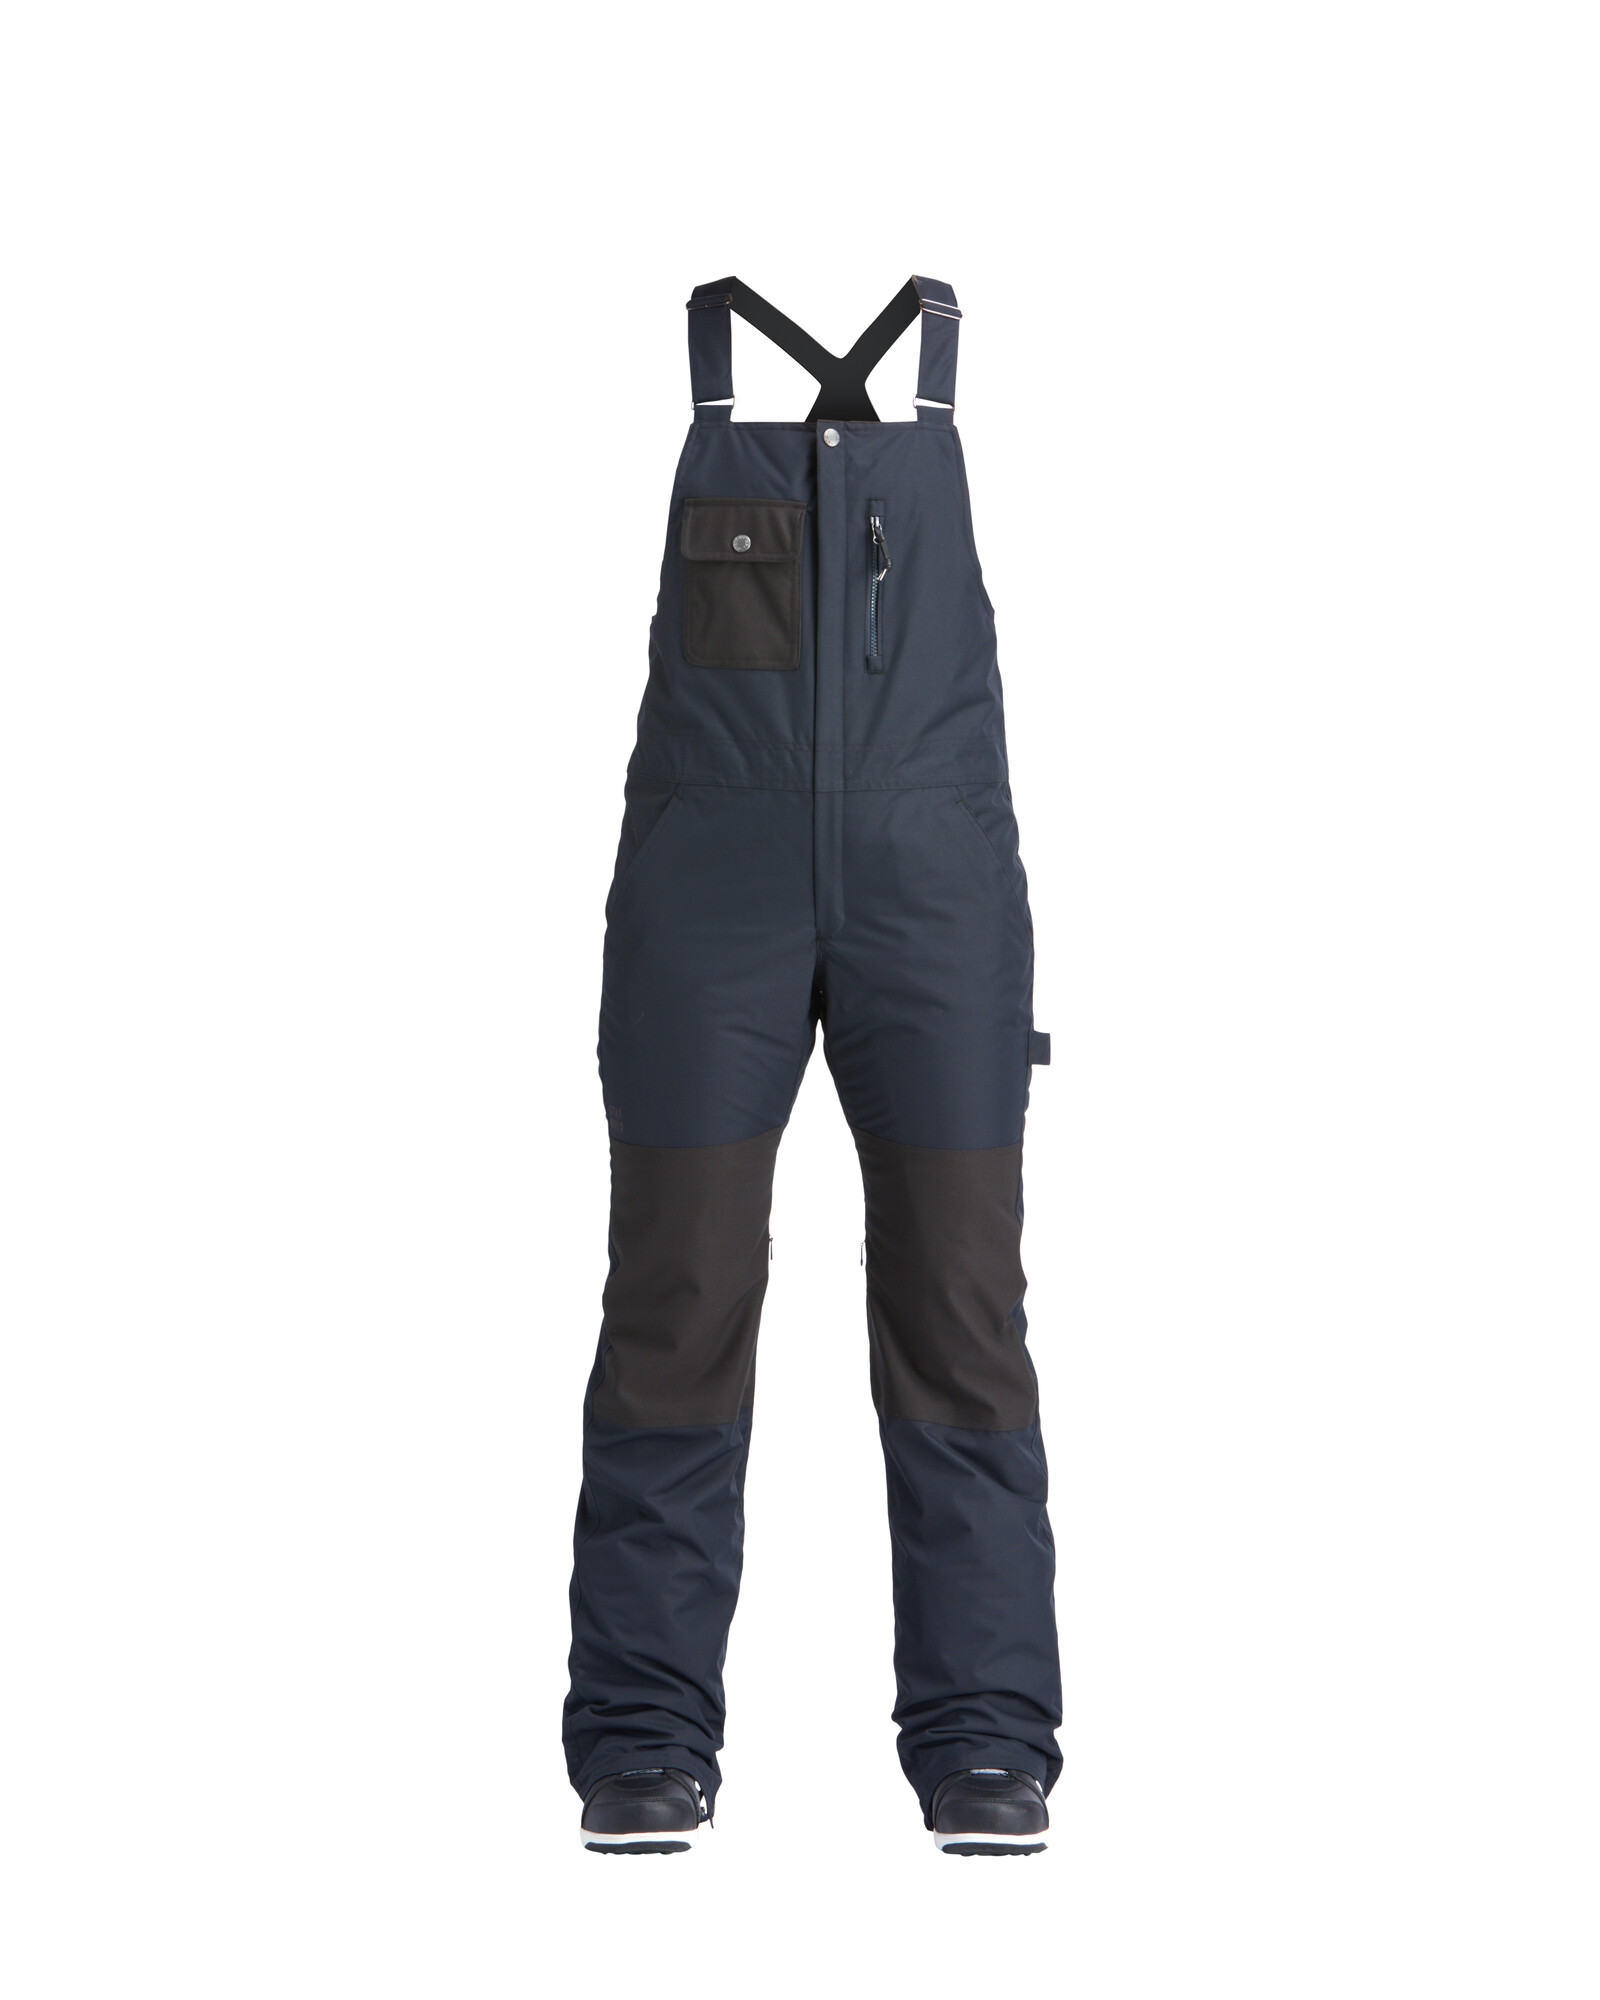 Airblaster Womens Hot Bib snowboardpants insulated black 2022